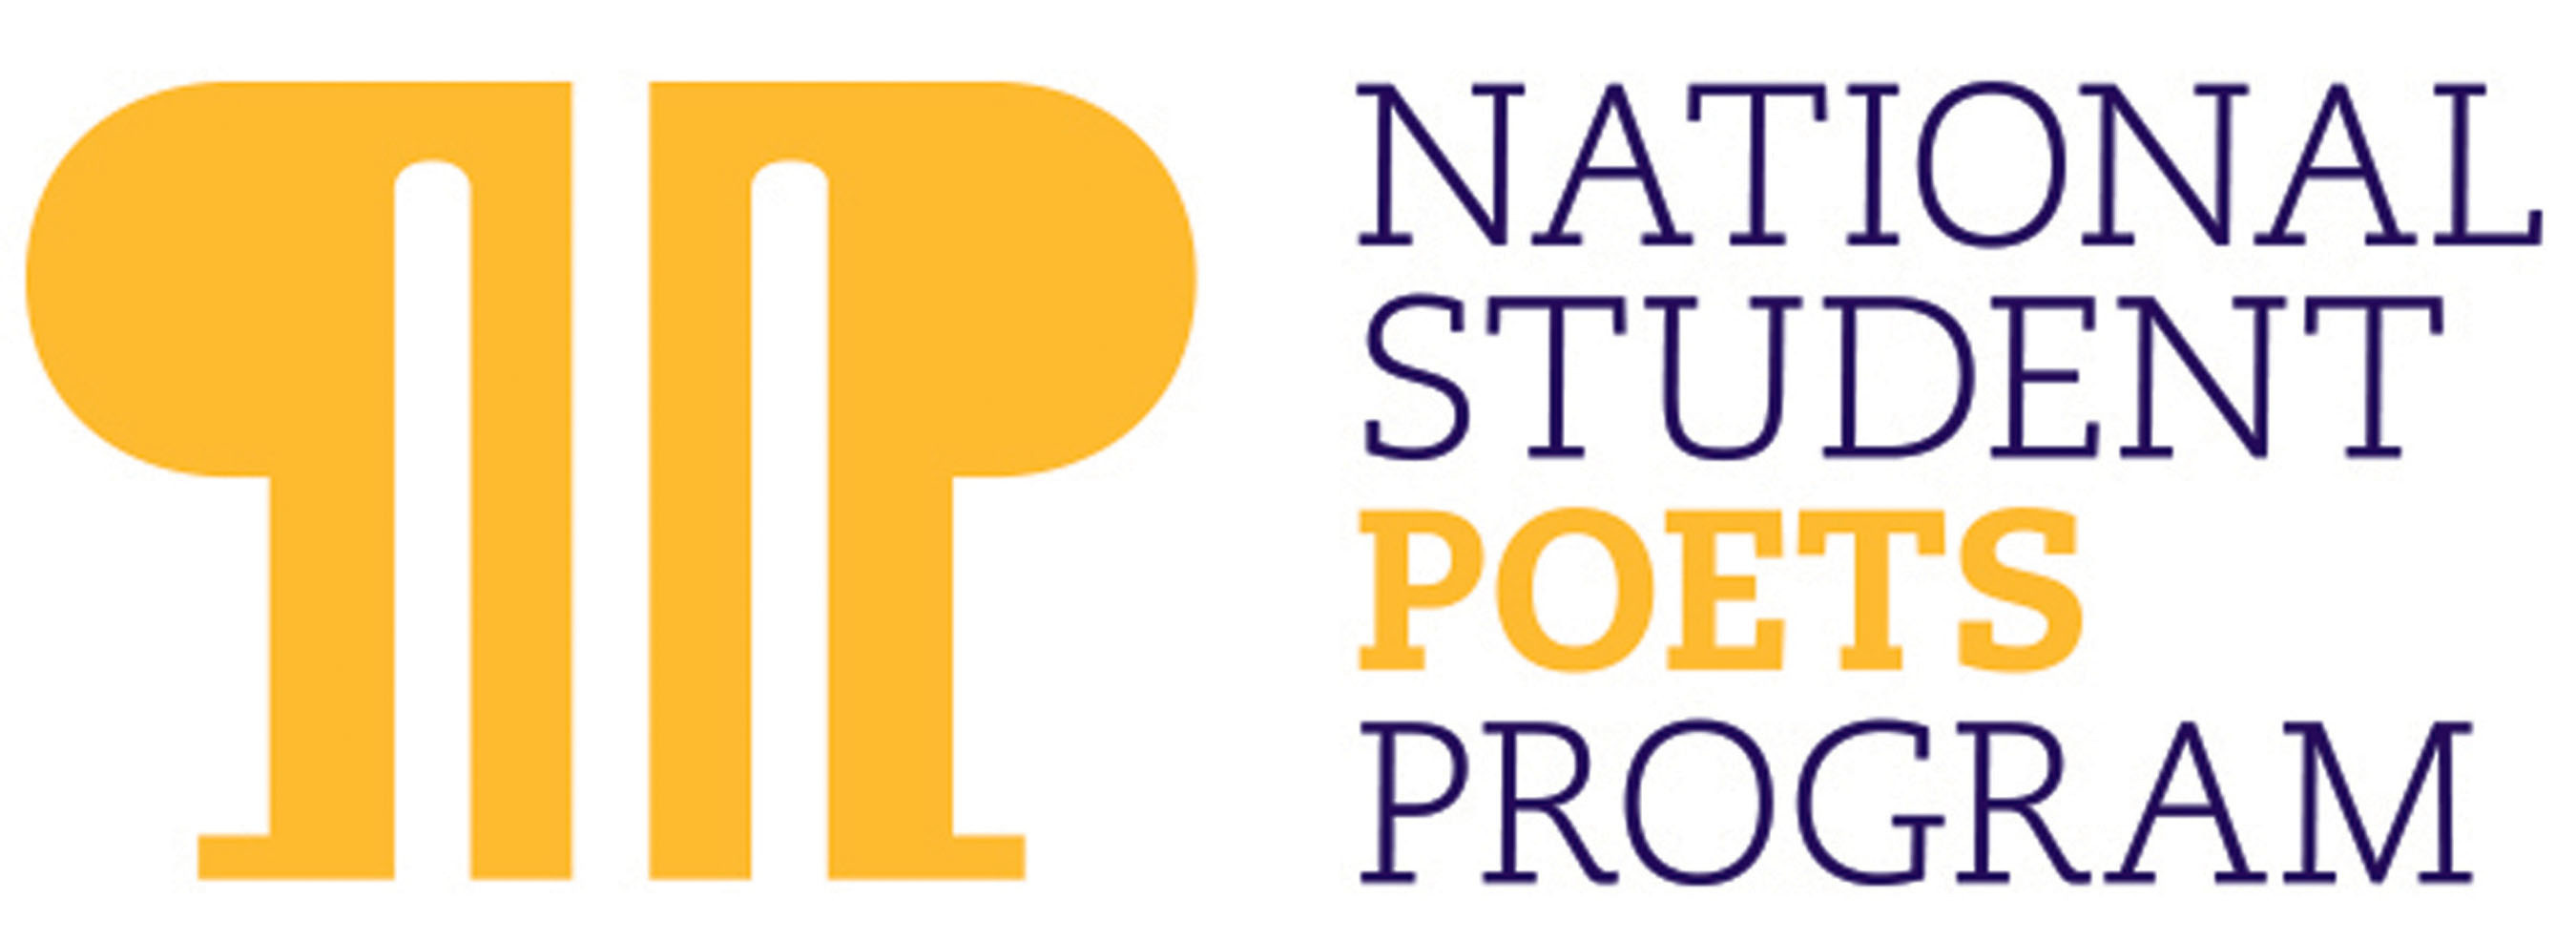 National Student Poets Program Logo.